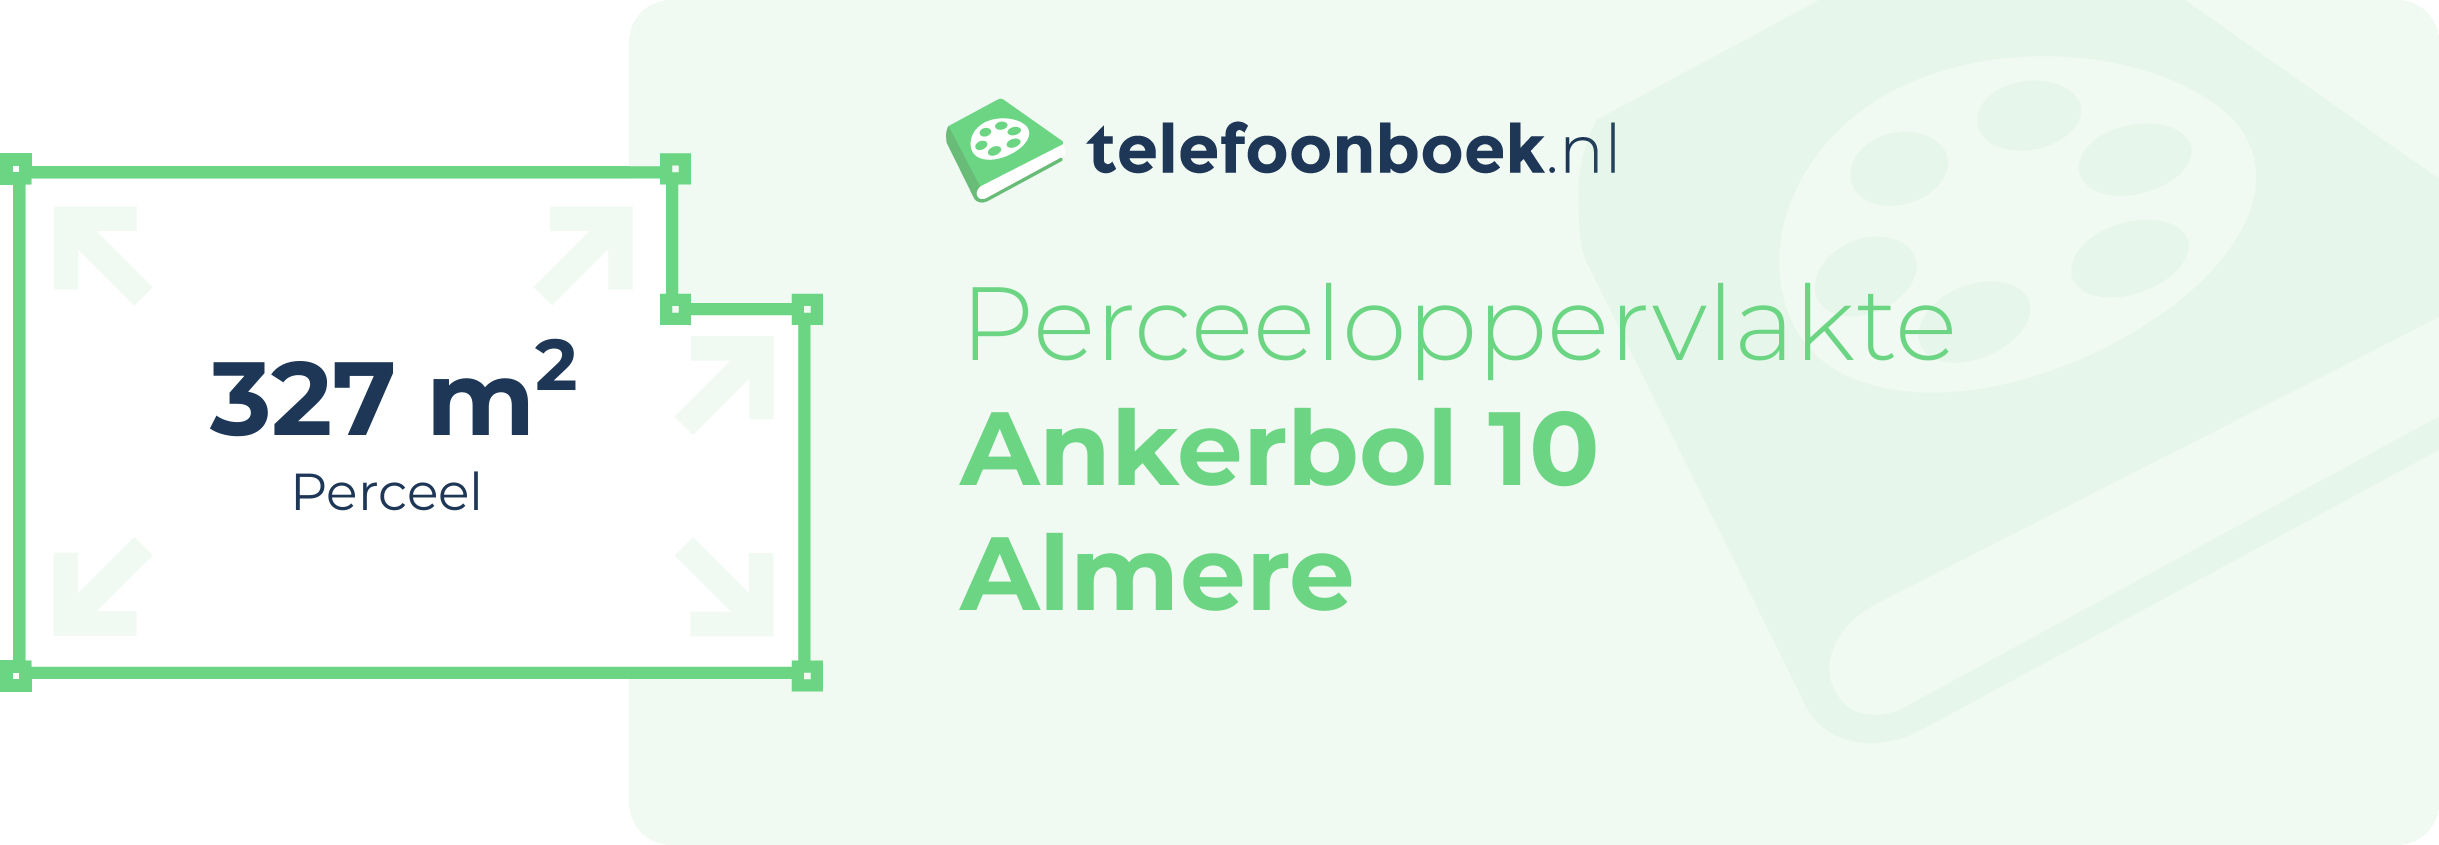 Perceeloppervlakte Ankerbol 10 Almere